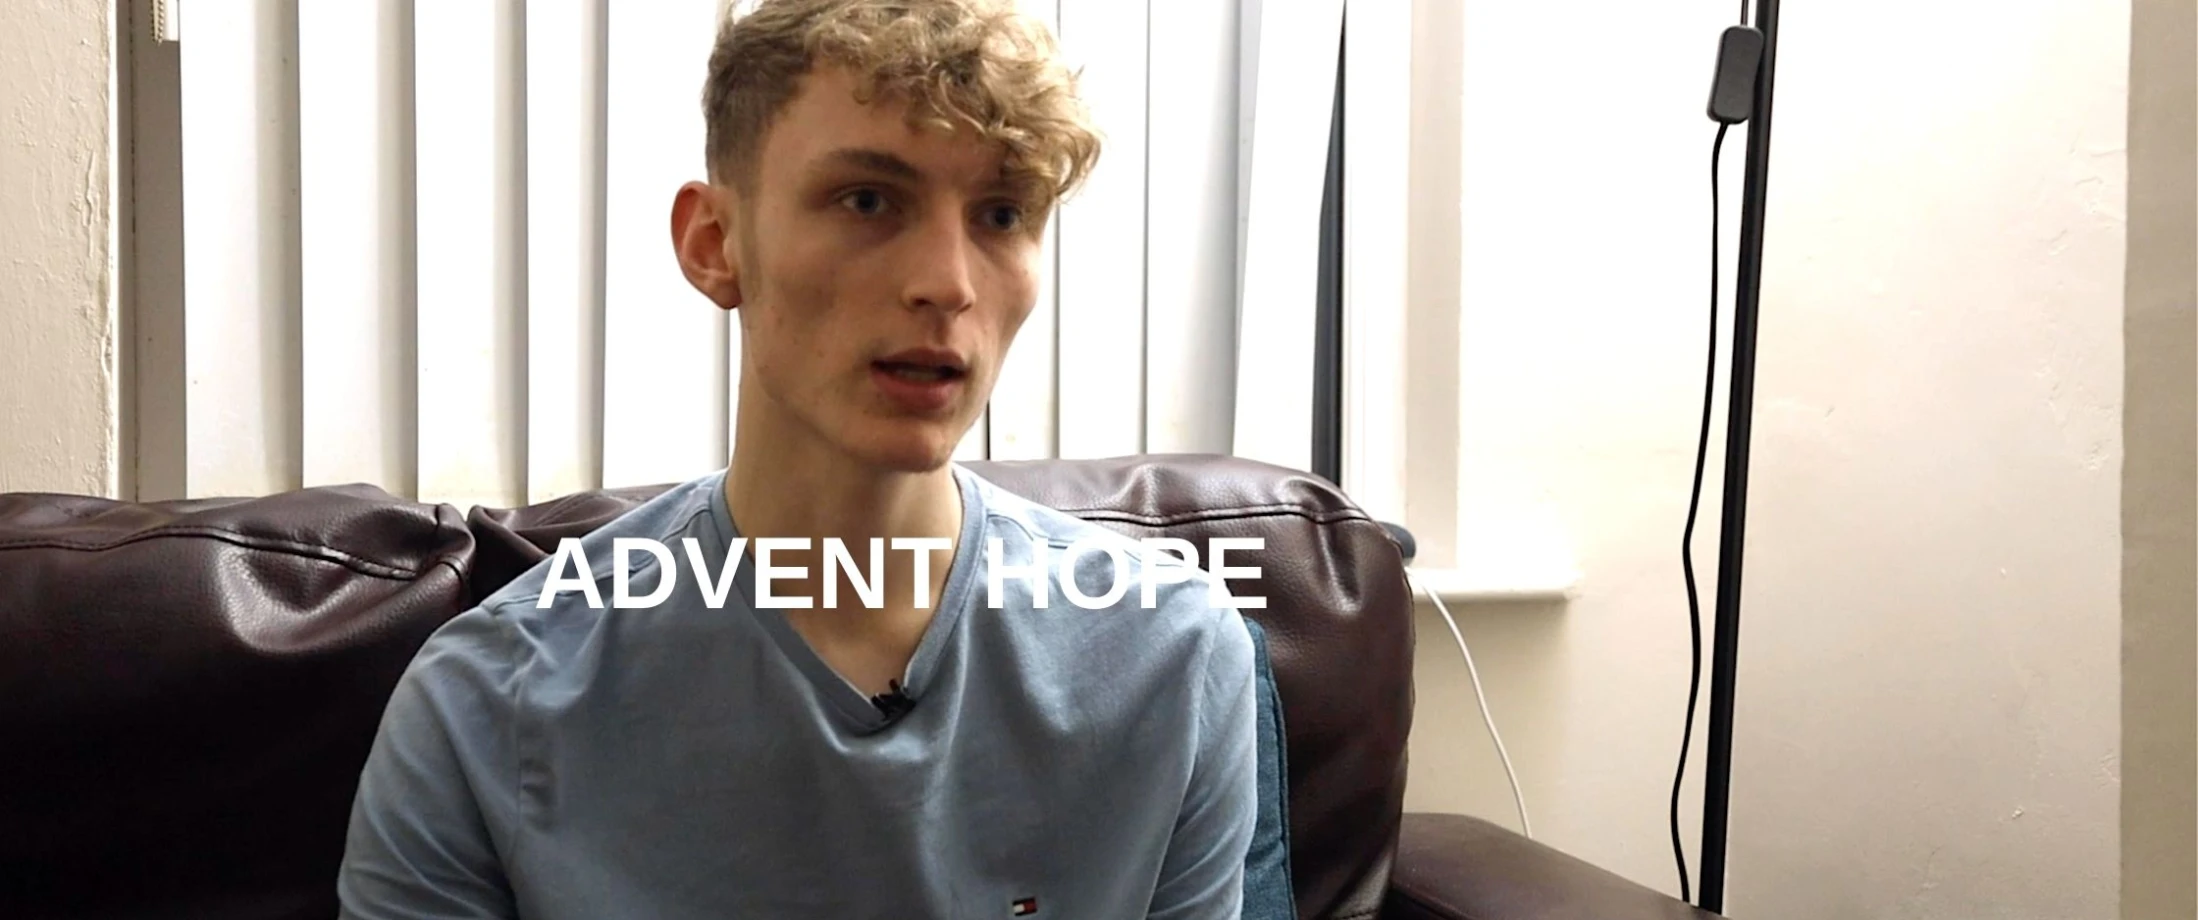 Advent Hope – Dan